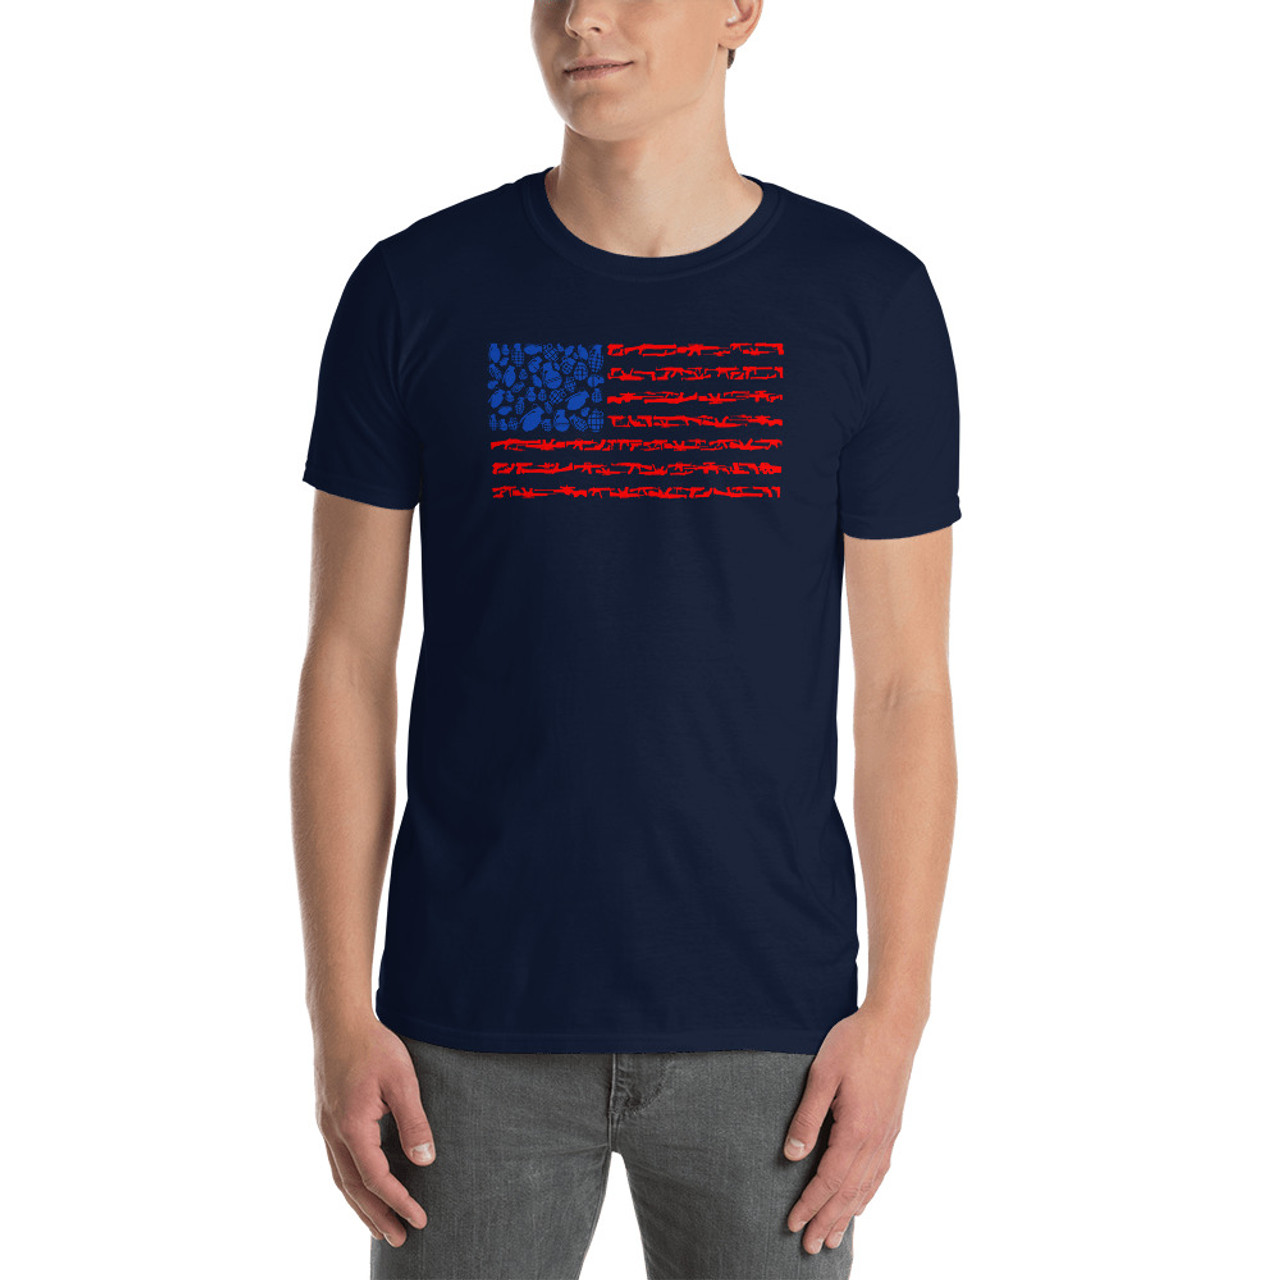 Weapon Flag Short-Sleeve Unisex T-Shirt - Meach's Military Memorabilia ...